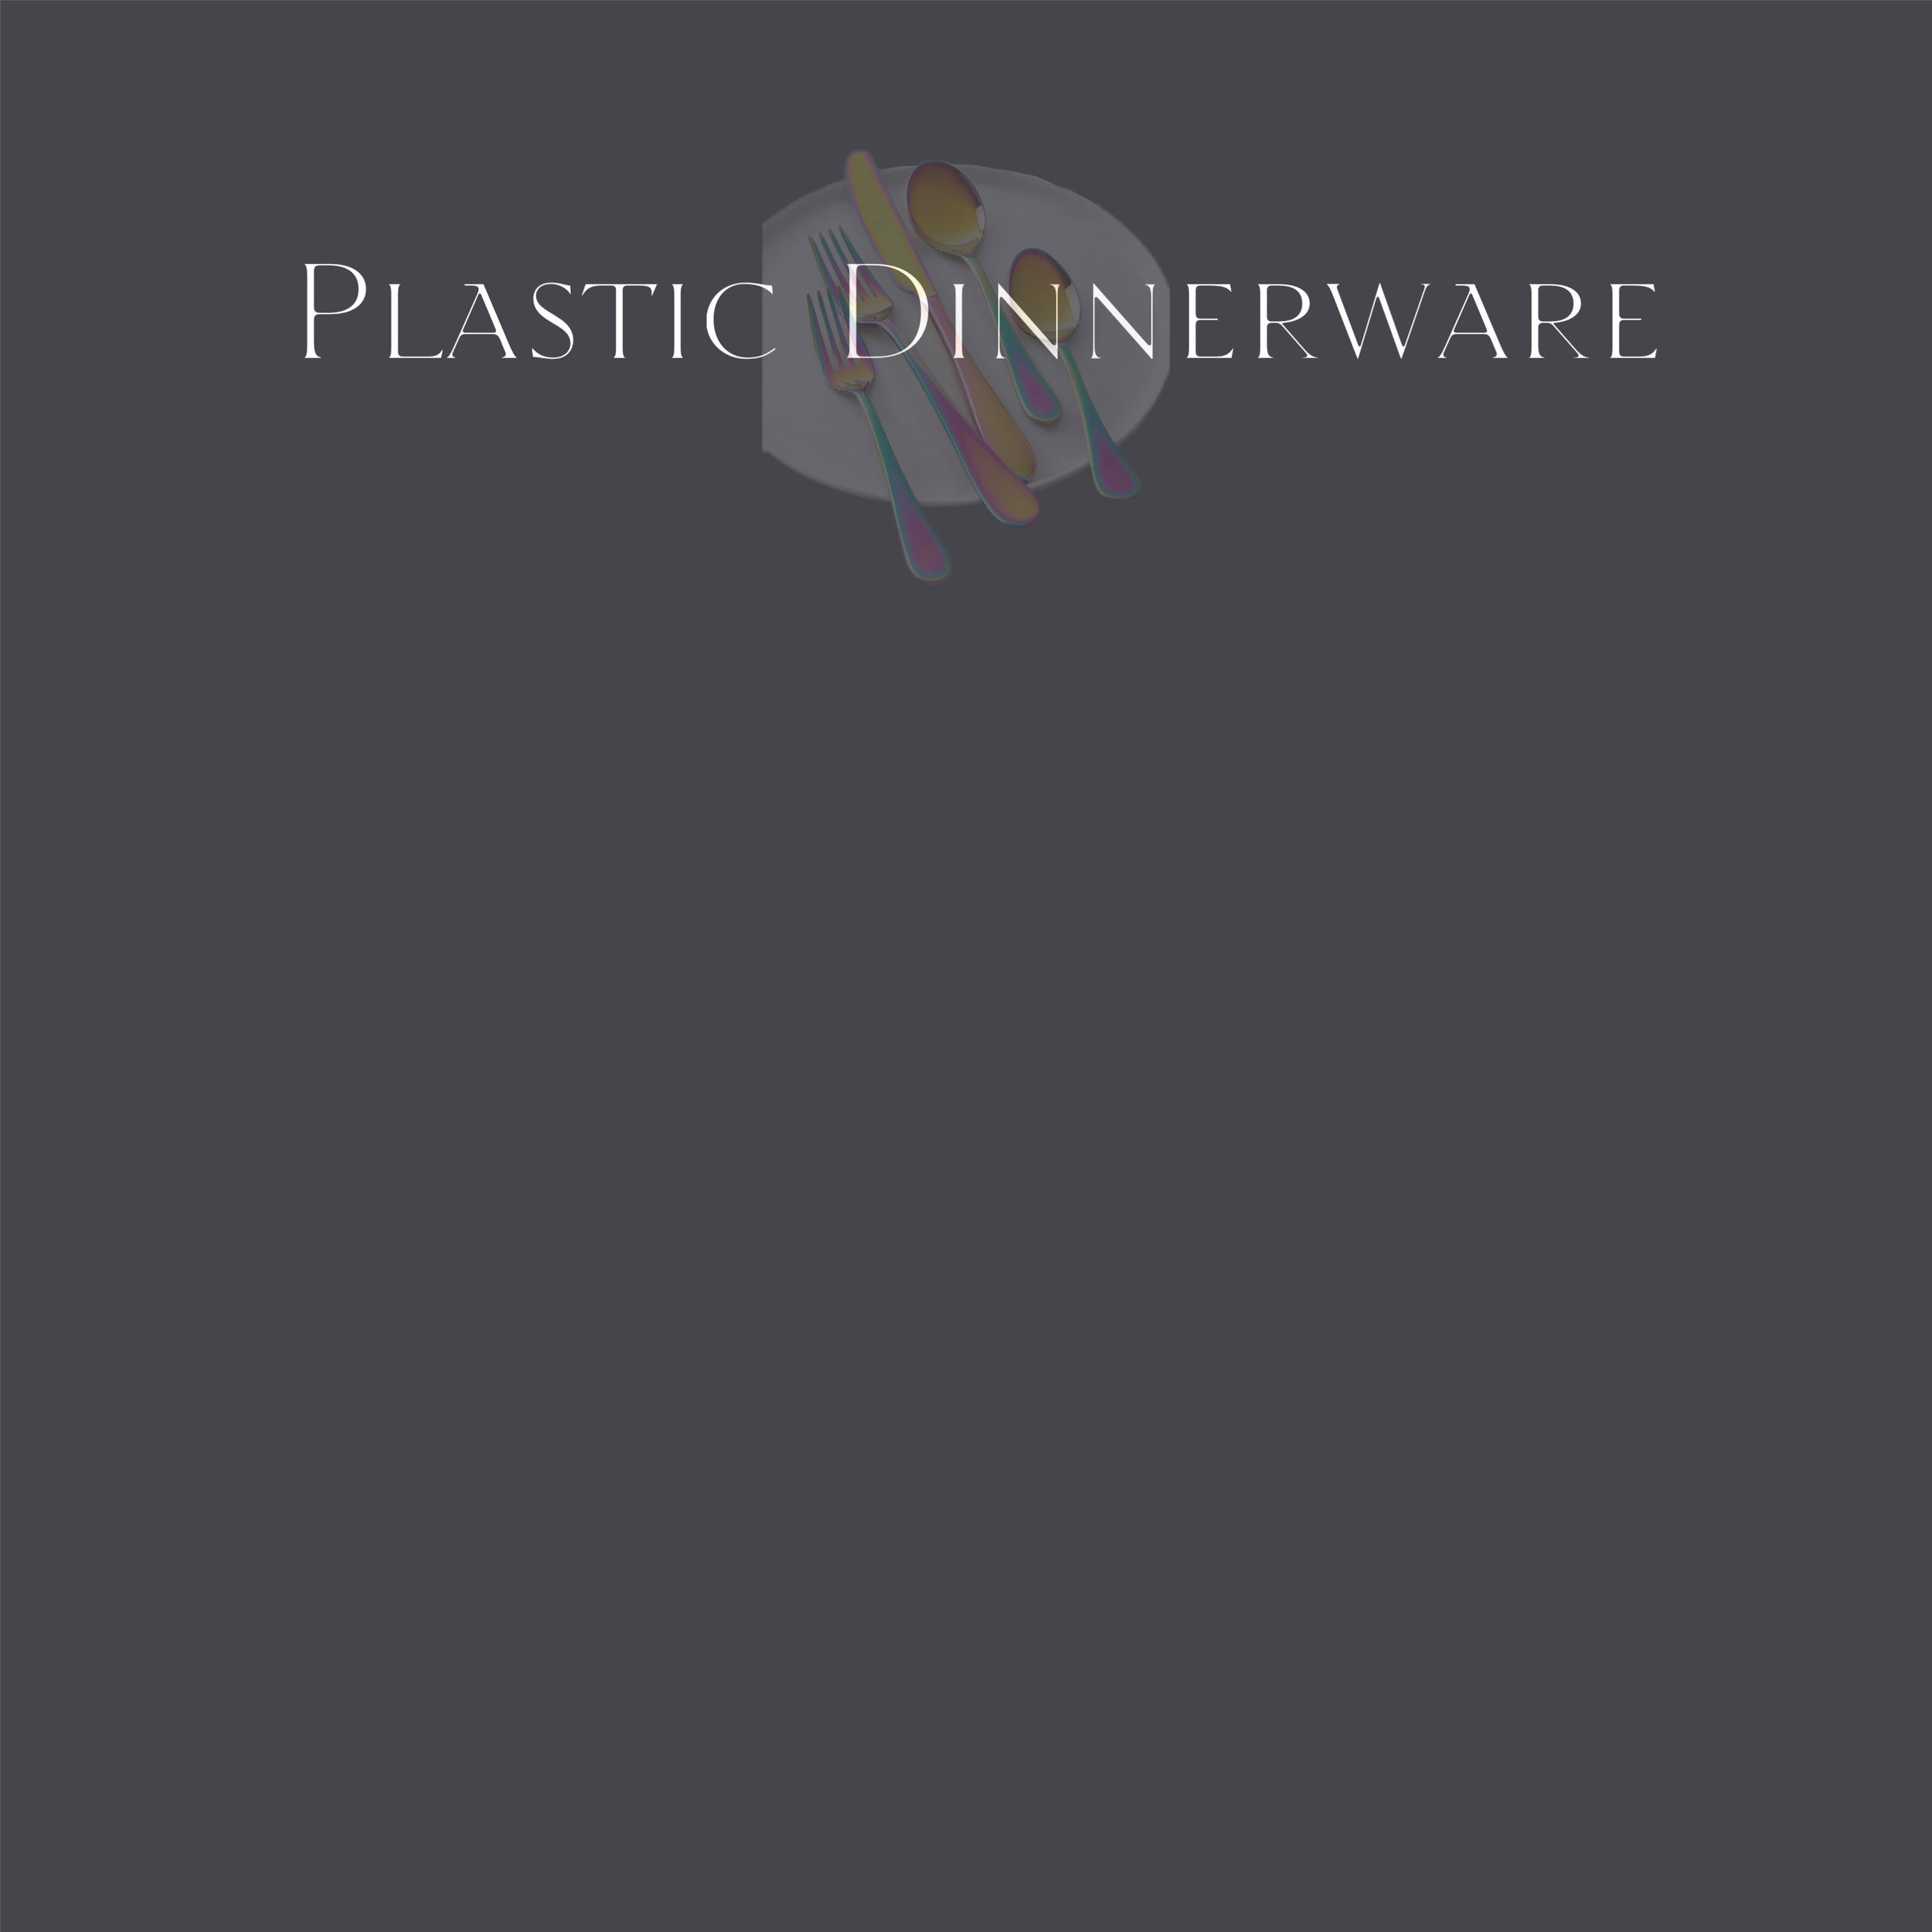 Plastic Dinnerware